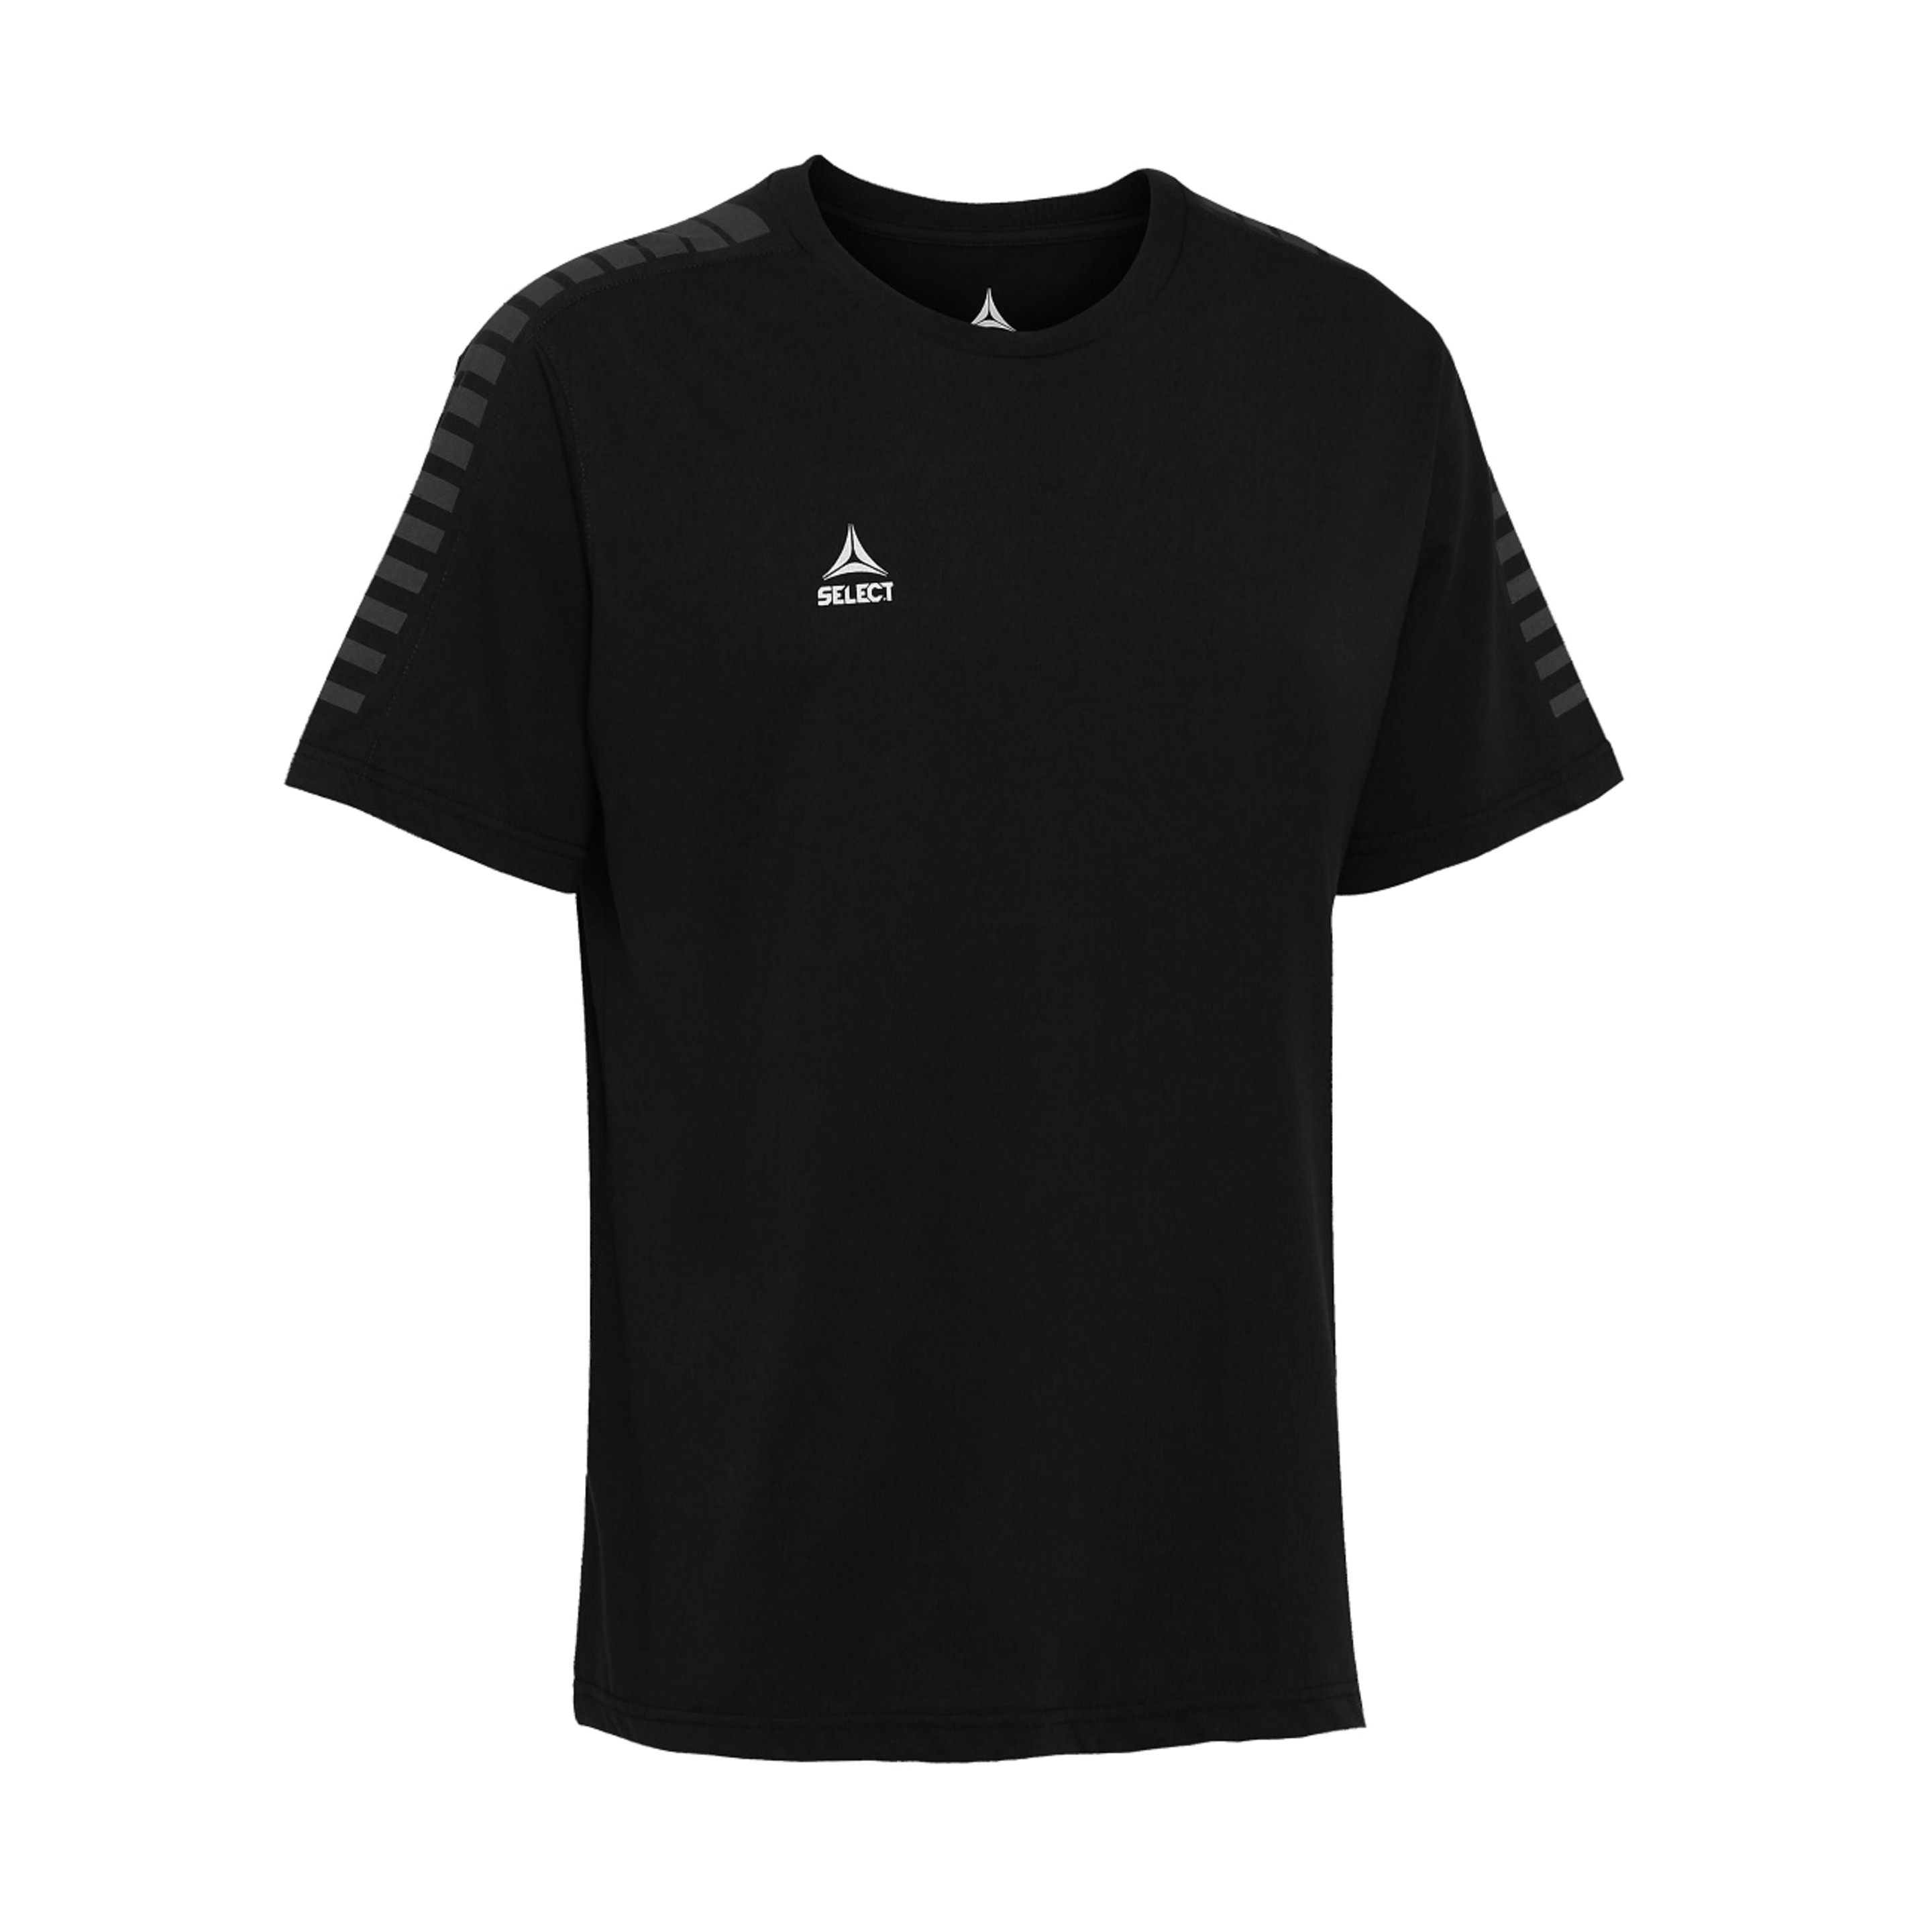 T-shirt Select Torino - negro - 